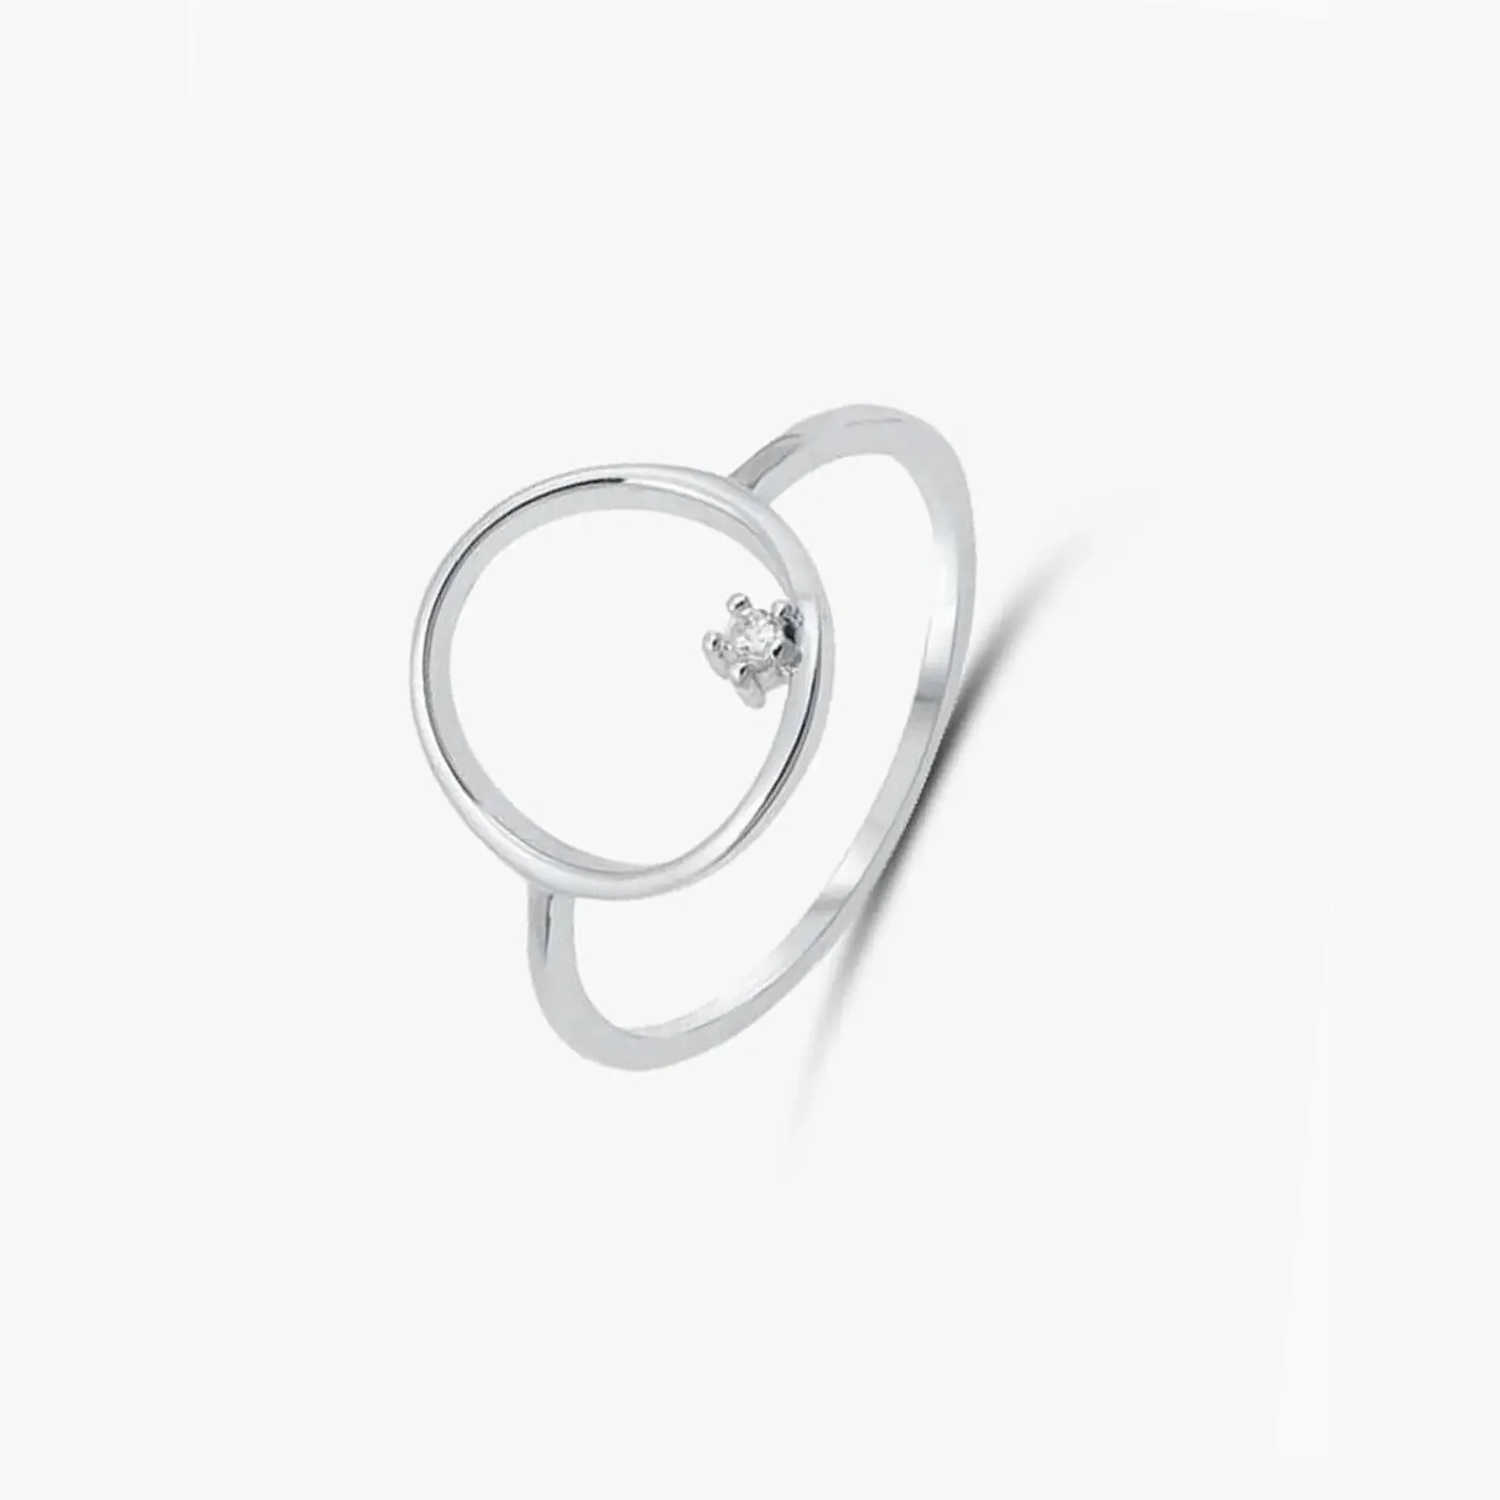 Emma silver ring - Zirconium